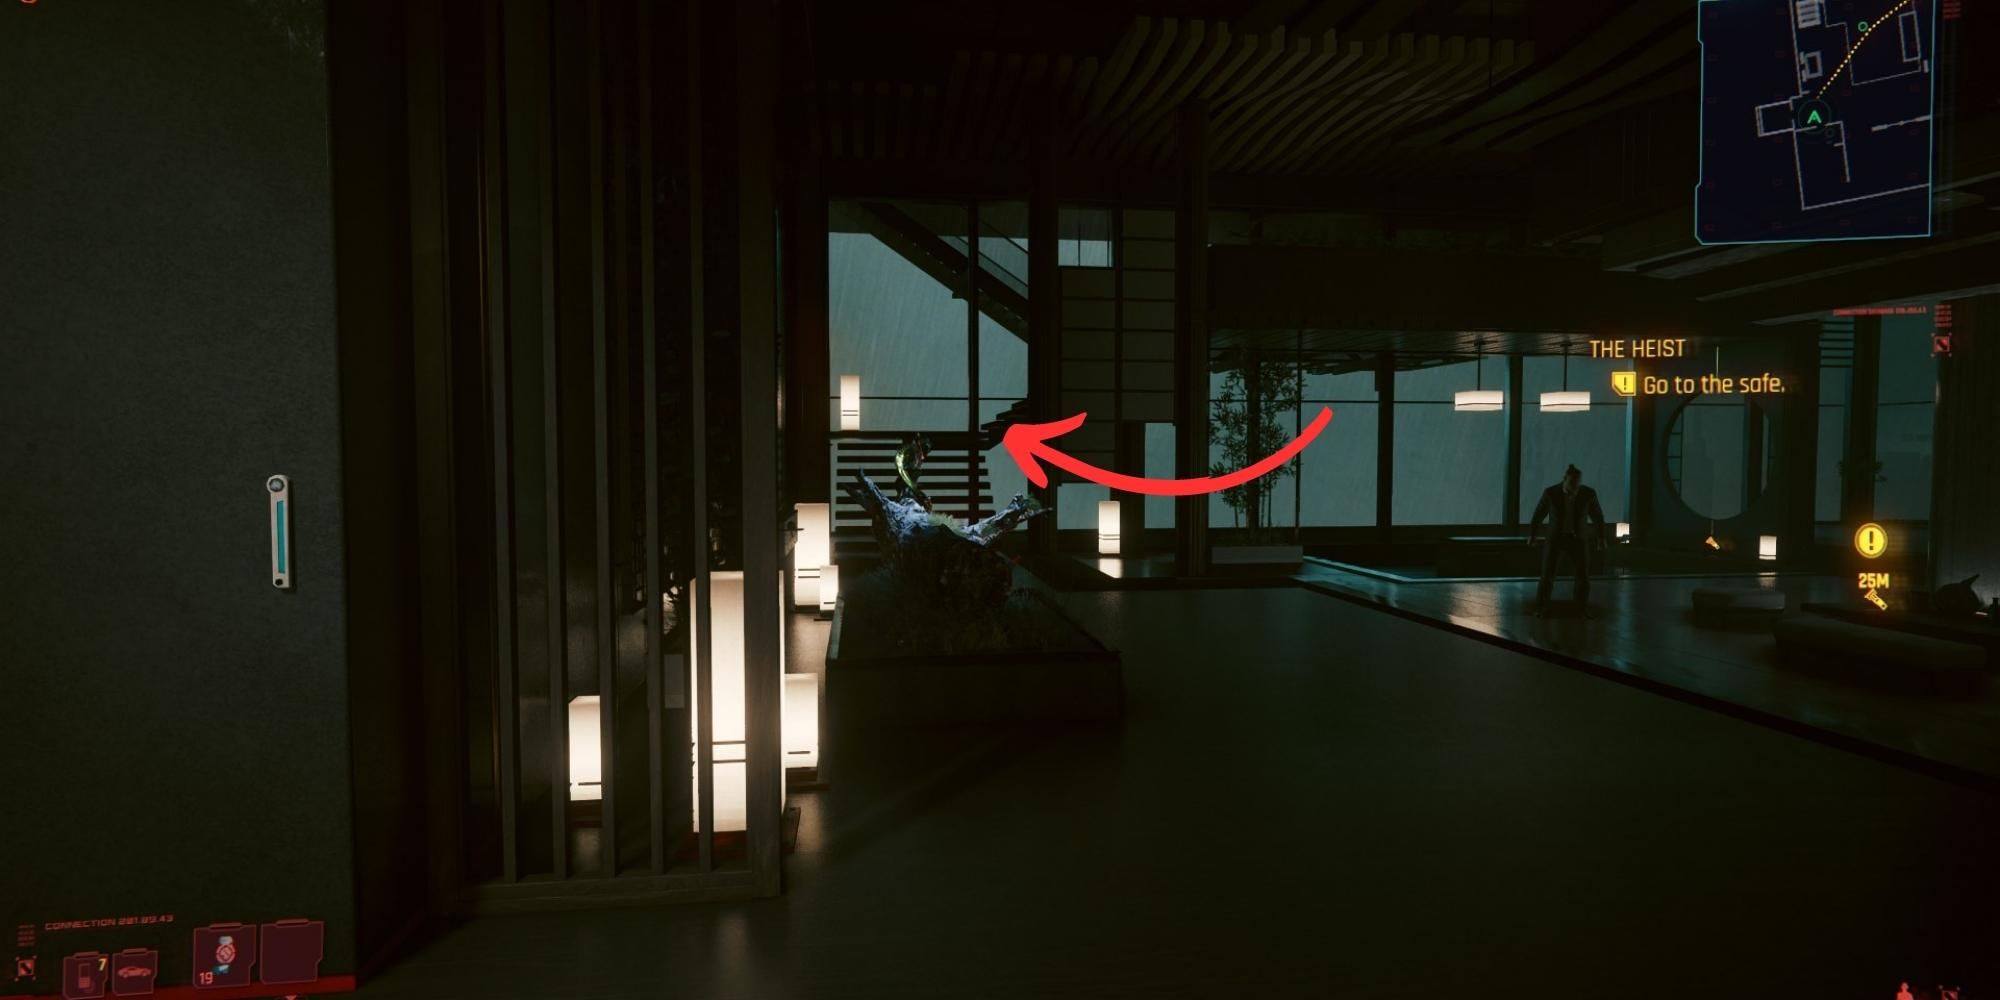 La chambre de Yorinobu Arasaka dans Cyberpunk 2077 avec une flèche pointant vers les escaliers menant au toit